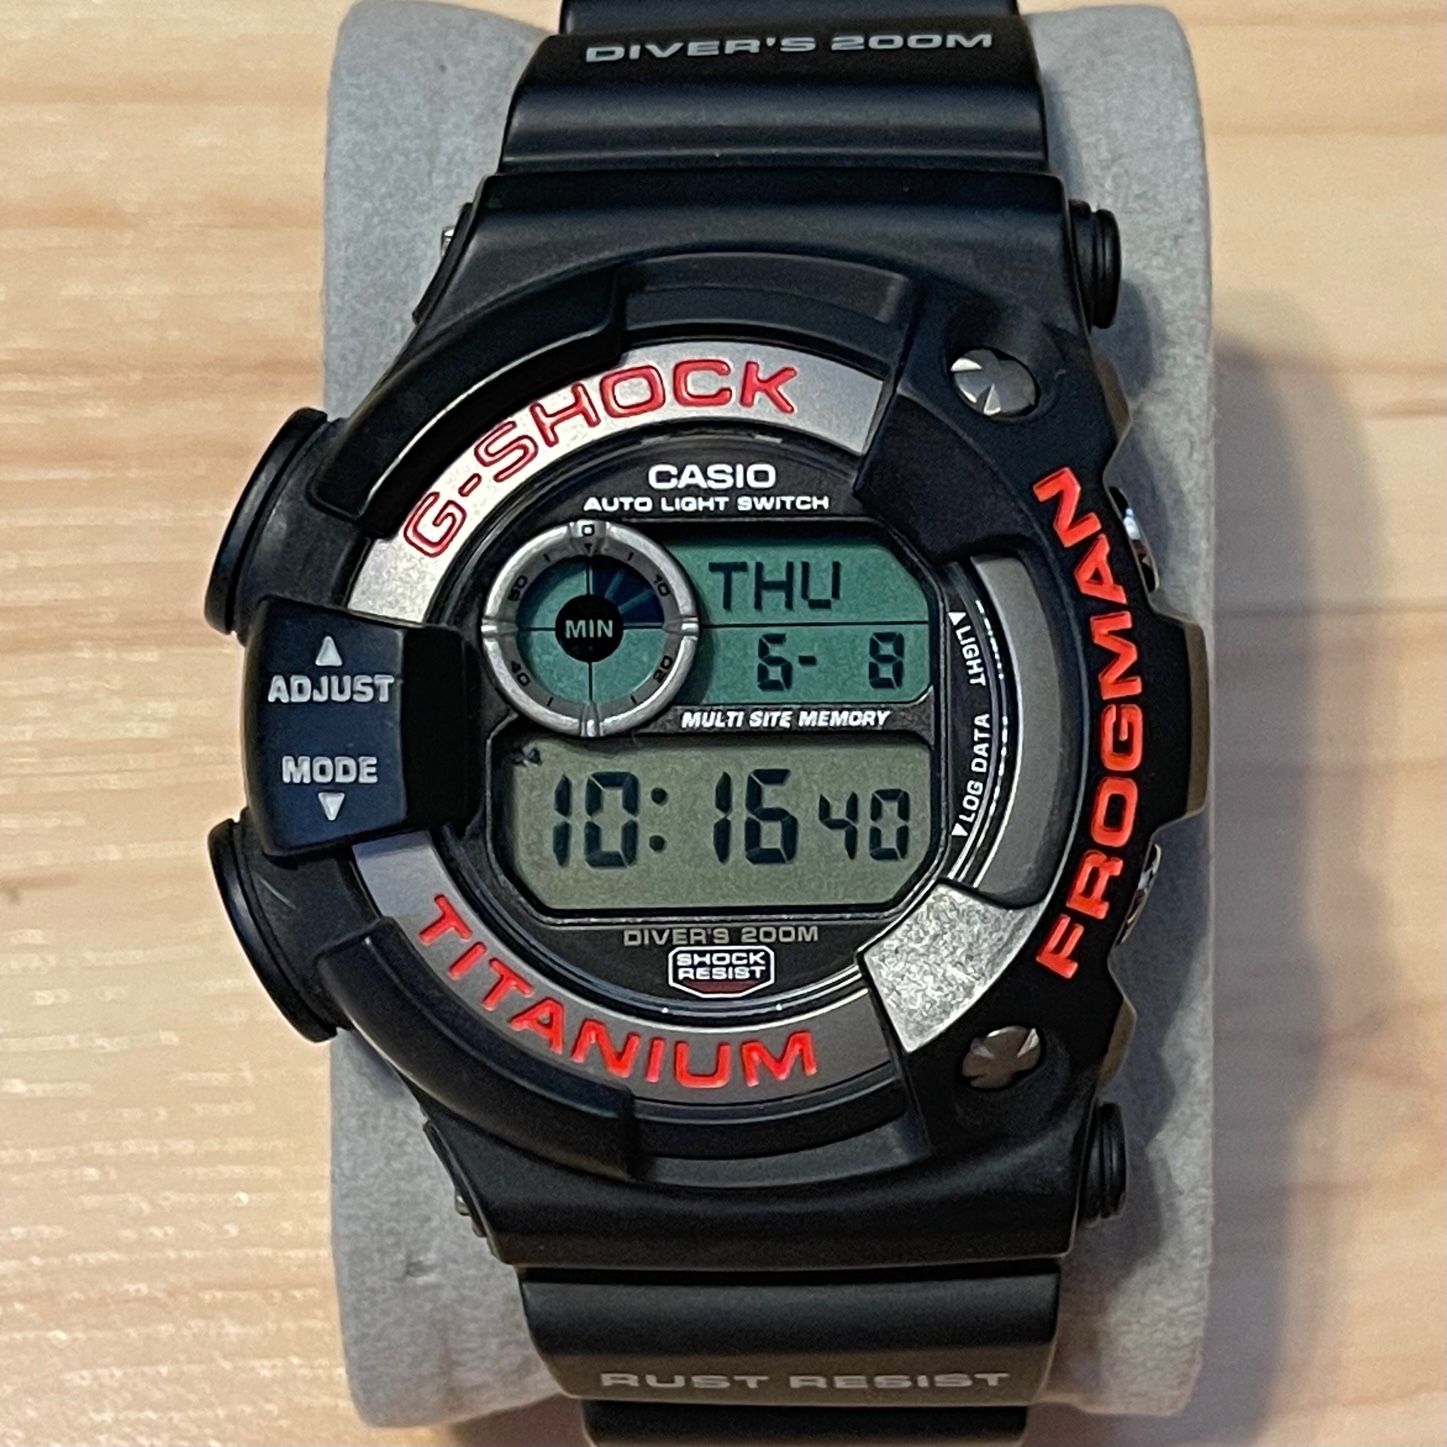 WTS] Casio G-Shock DW-9900-1A Titanium Frogman Black 9900 Series